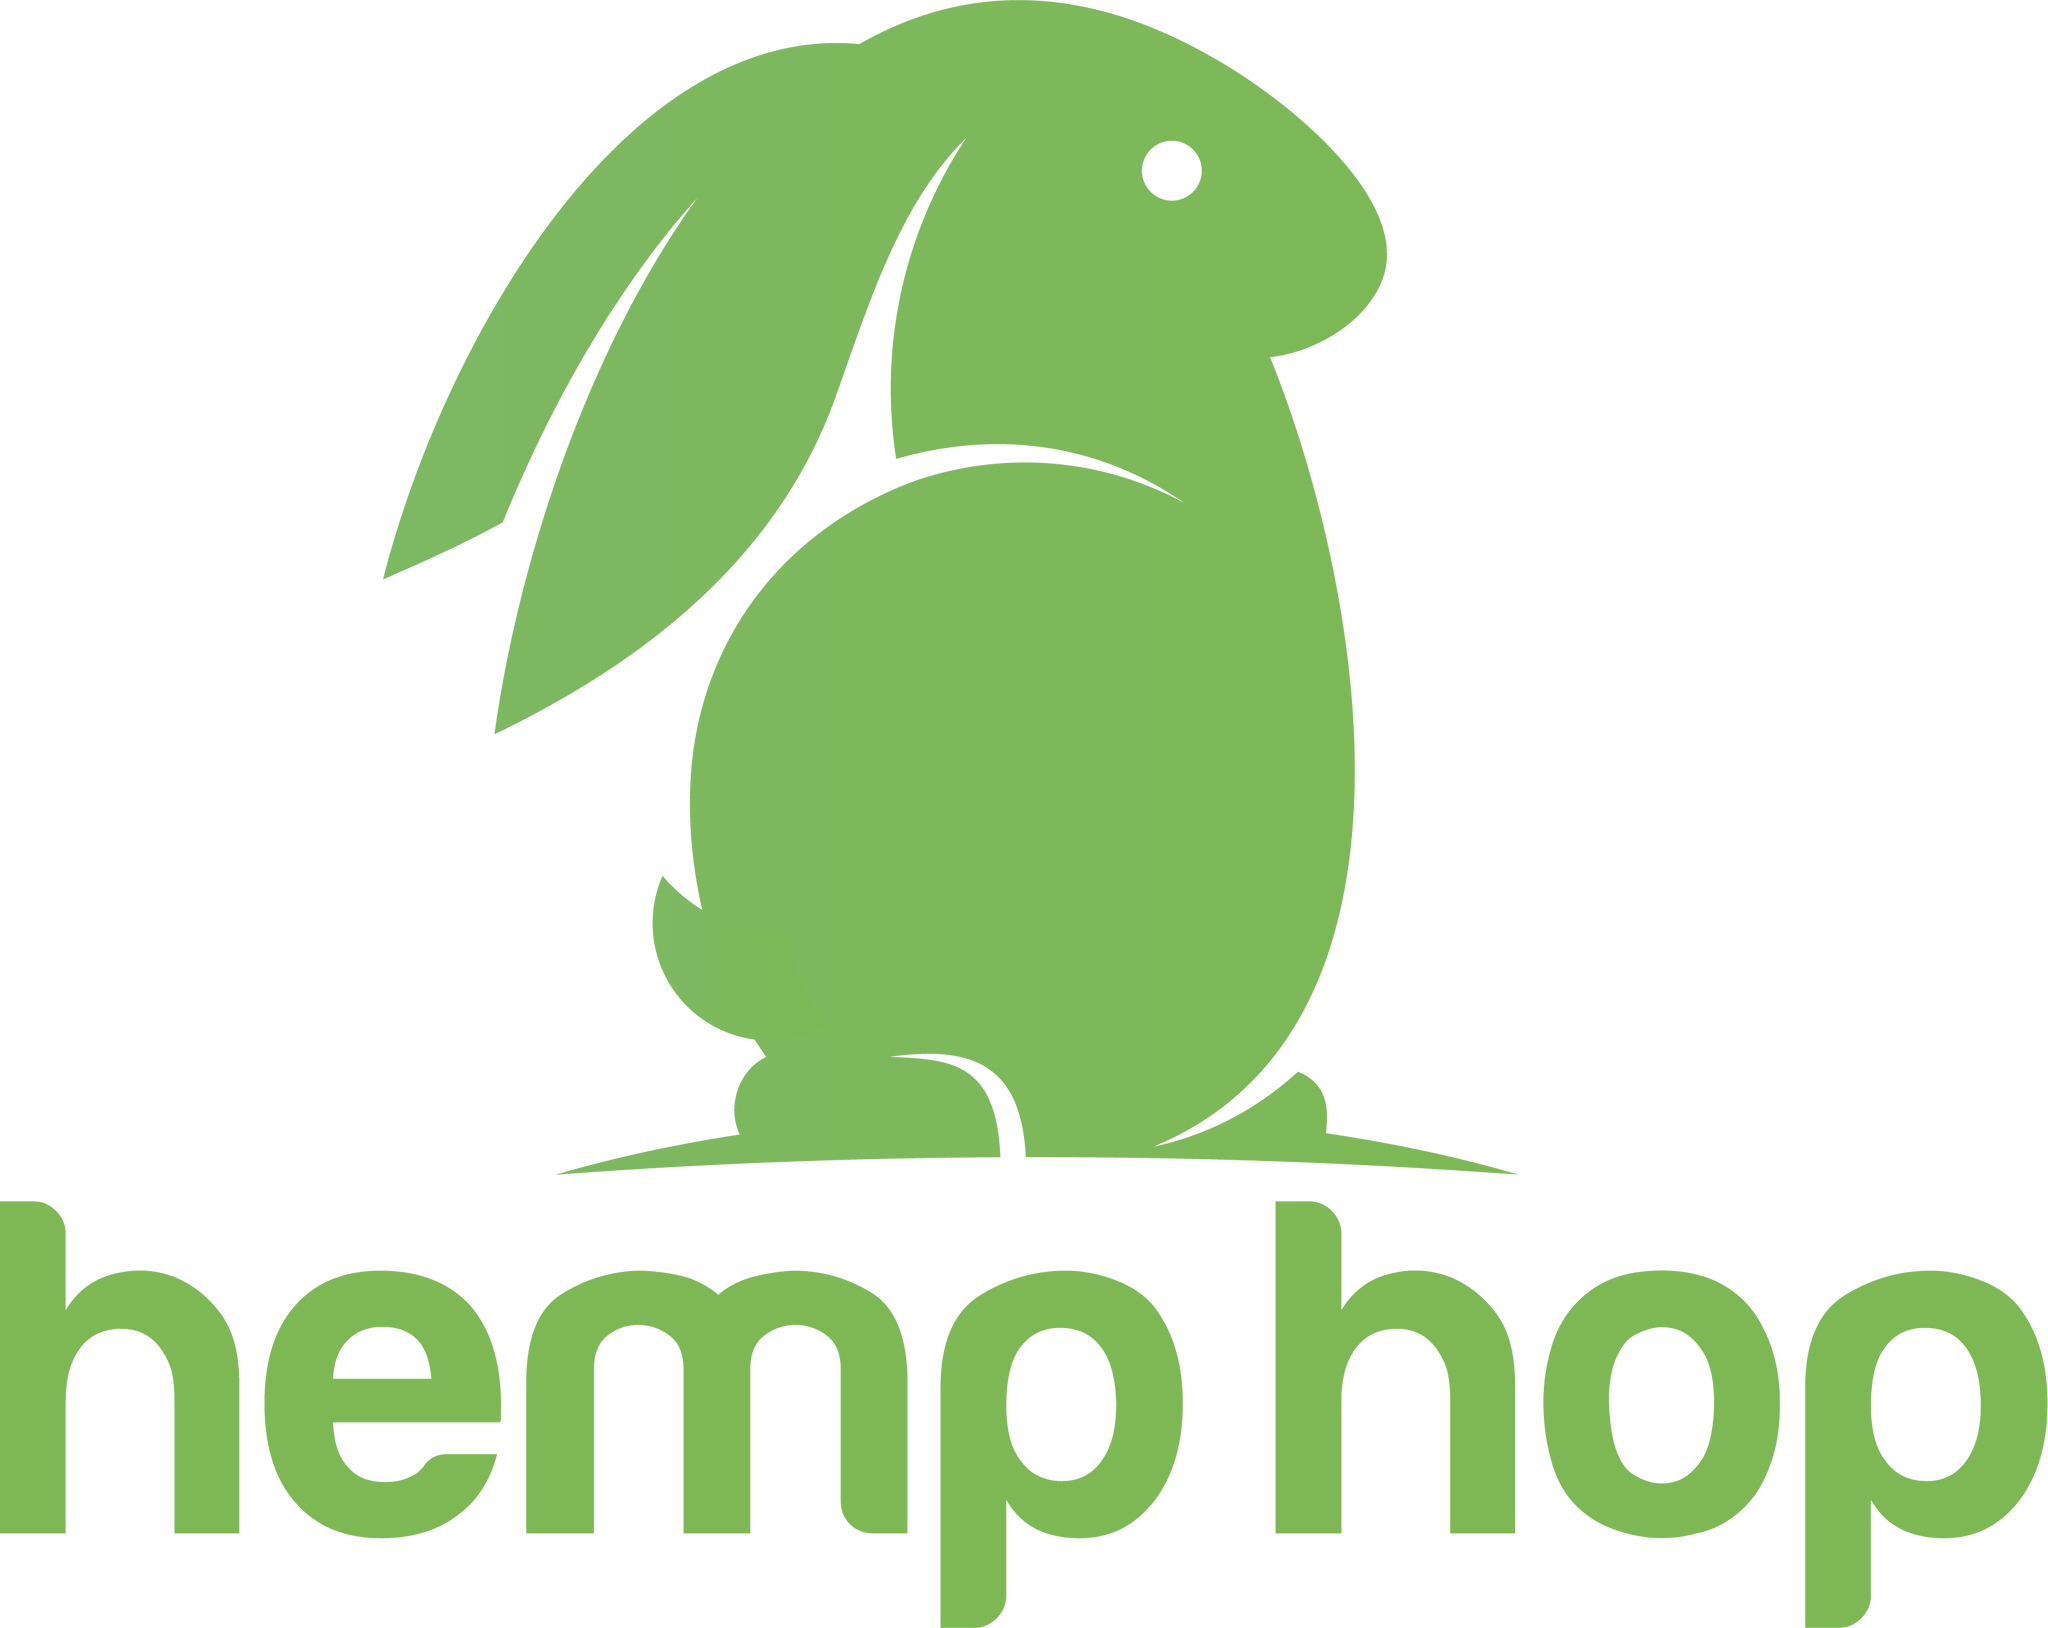 Hemp Hop Products	